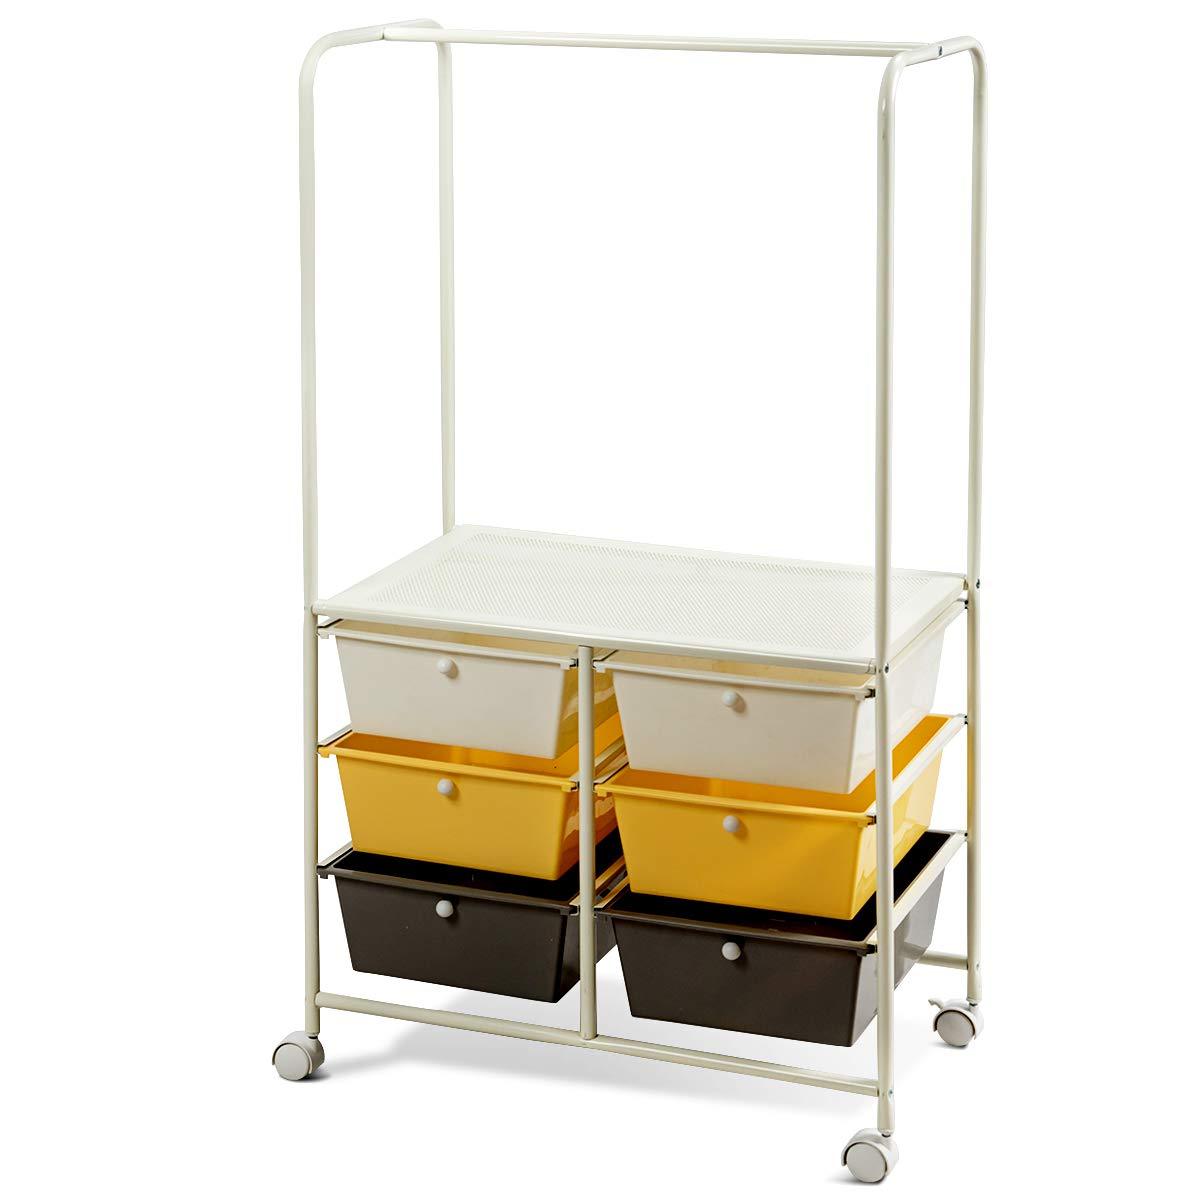 Giantex 6 Drawer Storage Cart, Office School Organizer Cart